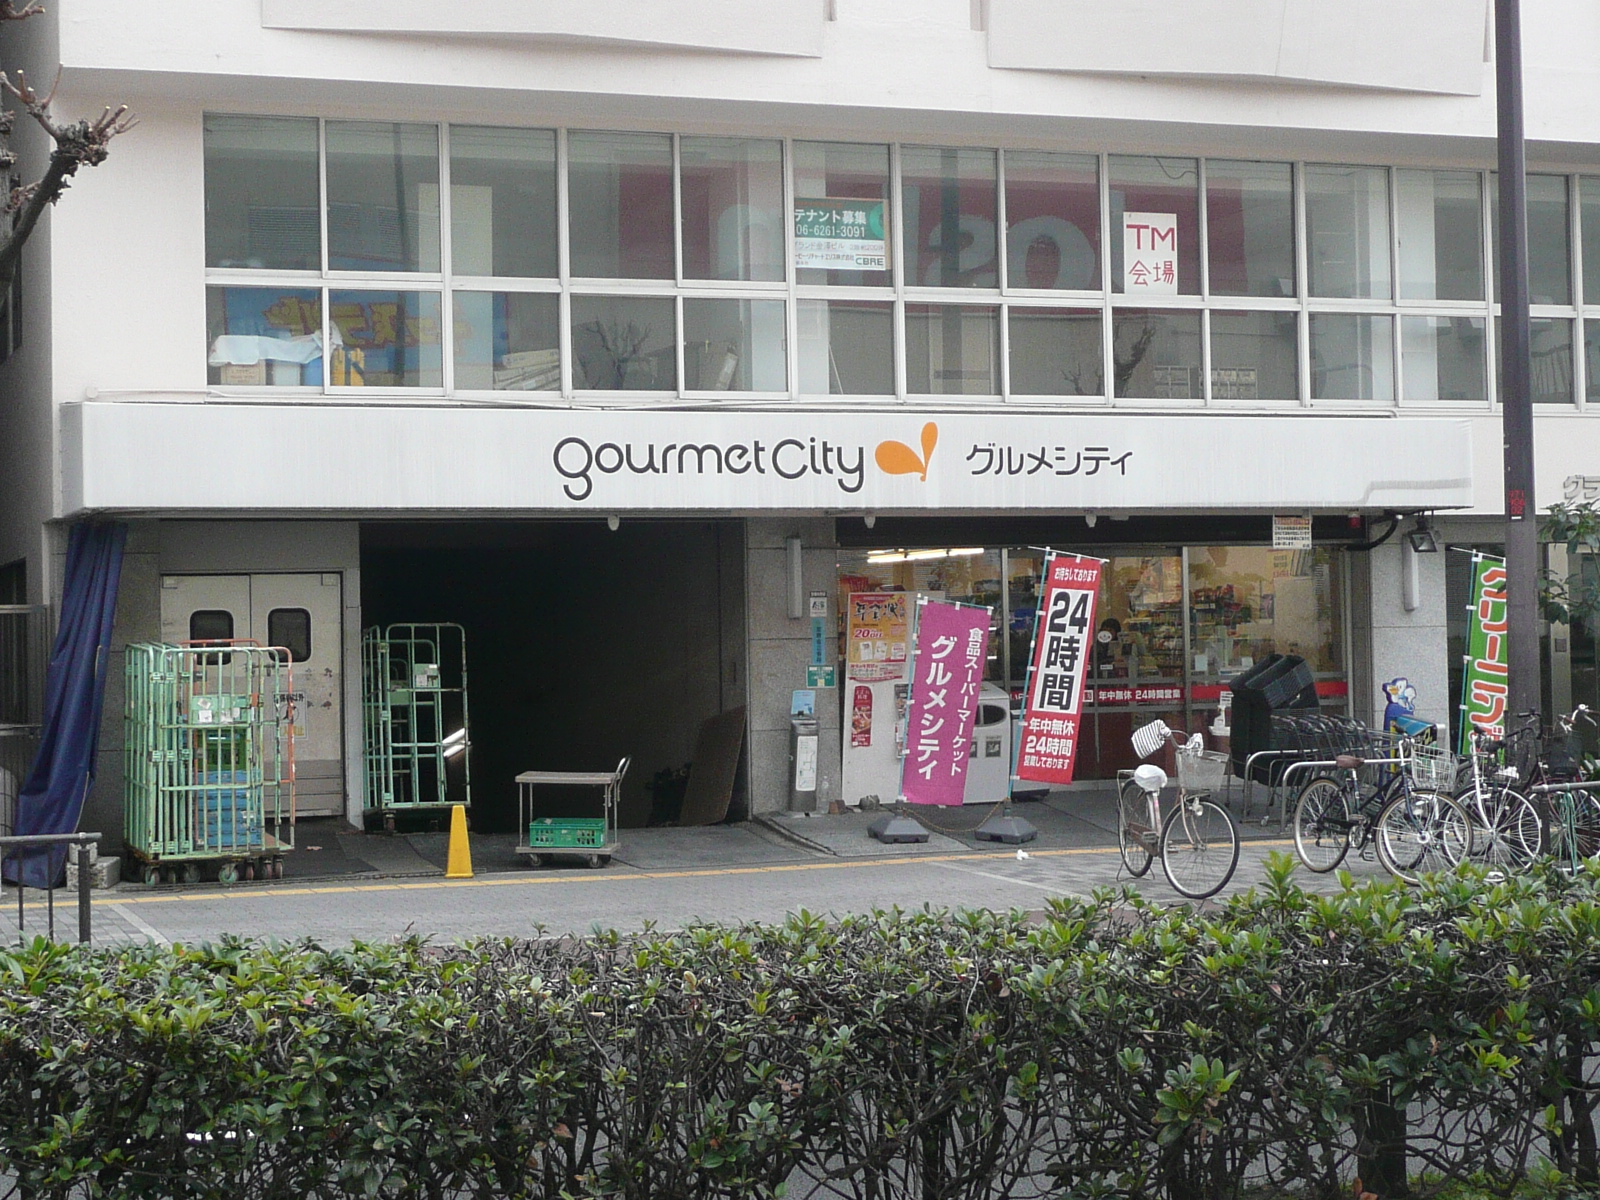 Supermarket. 1080m to Gourmet City Shin-Osaka store (Super)